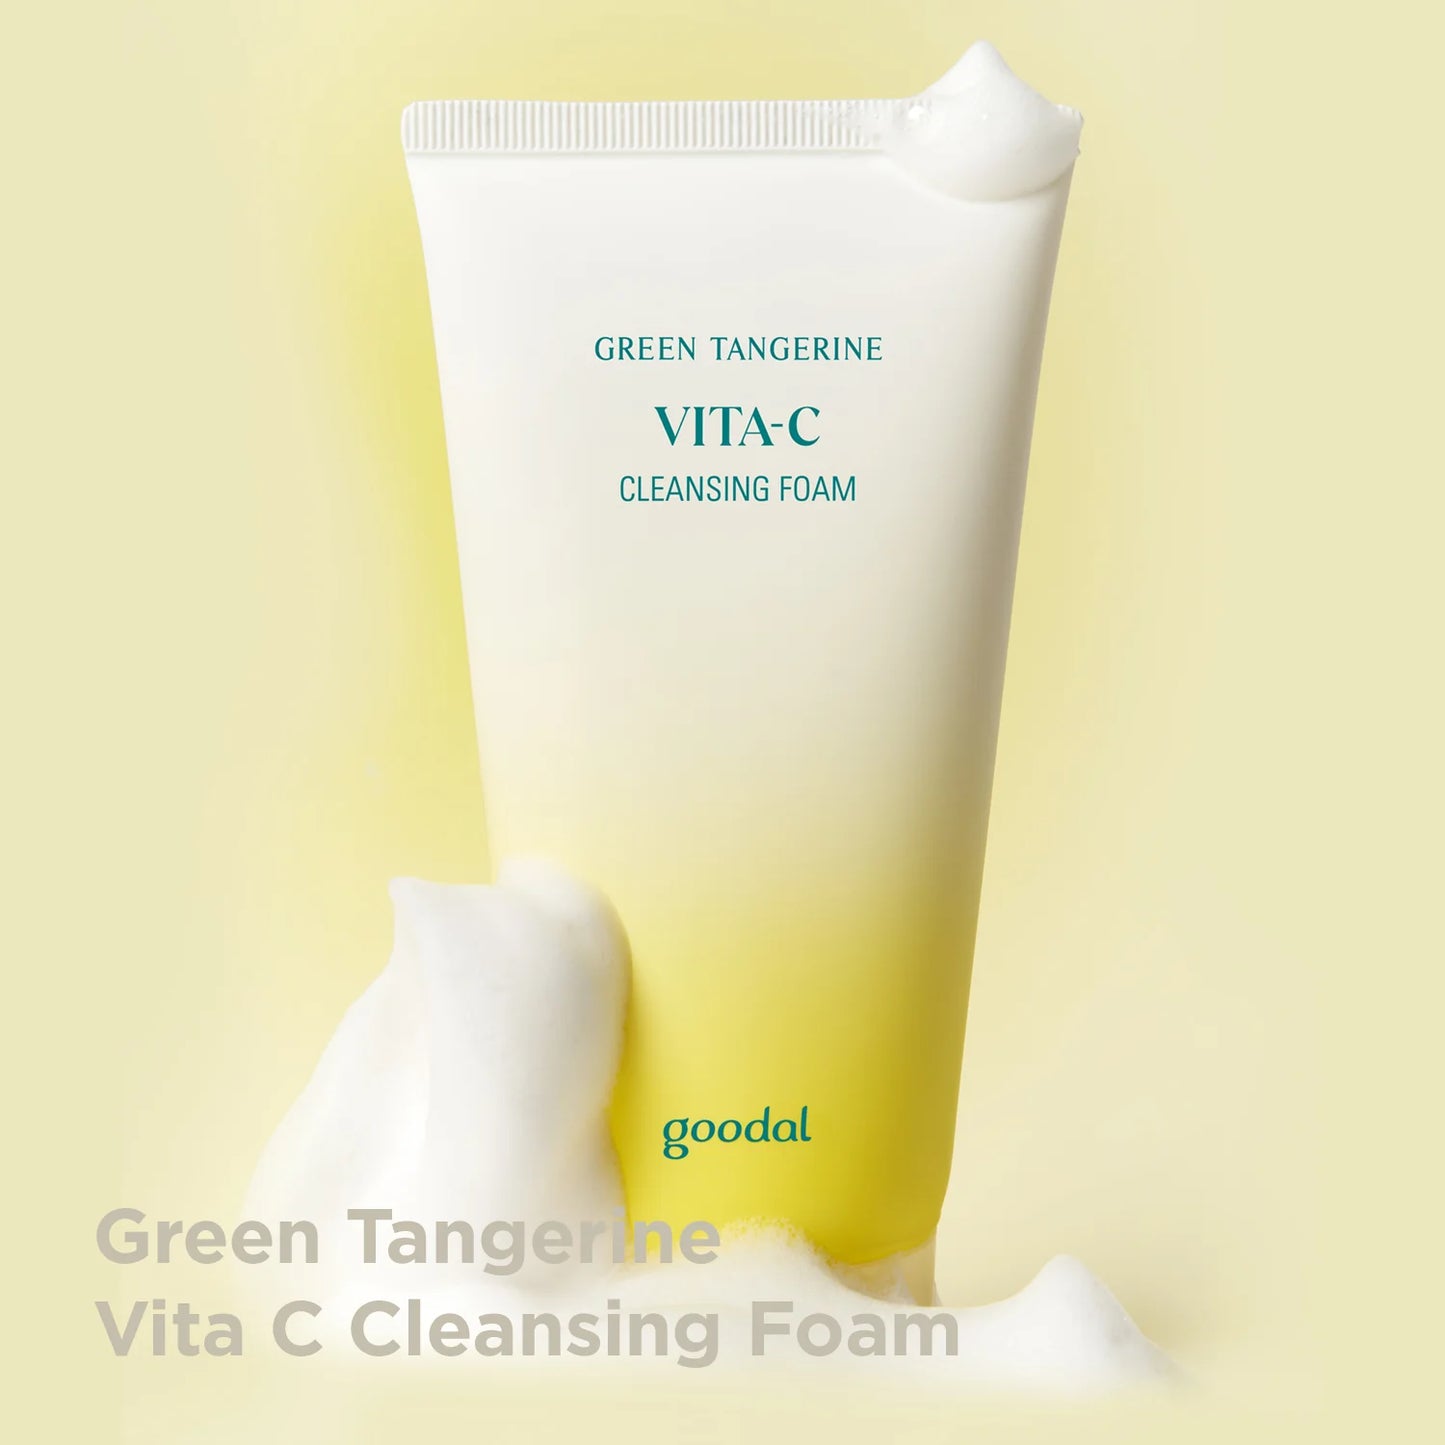 Goodal Green Tangerine Vita C Cleansing Foam 150ml